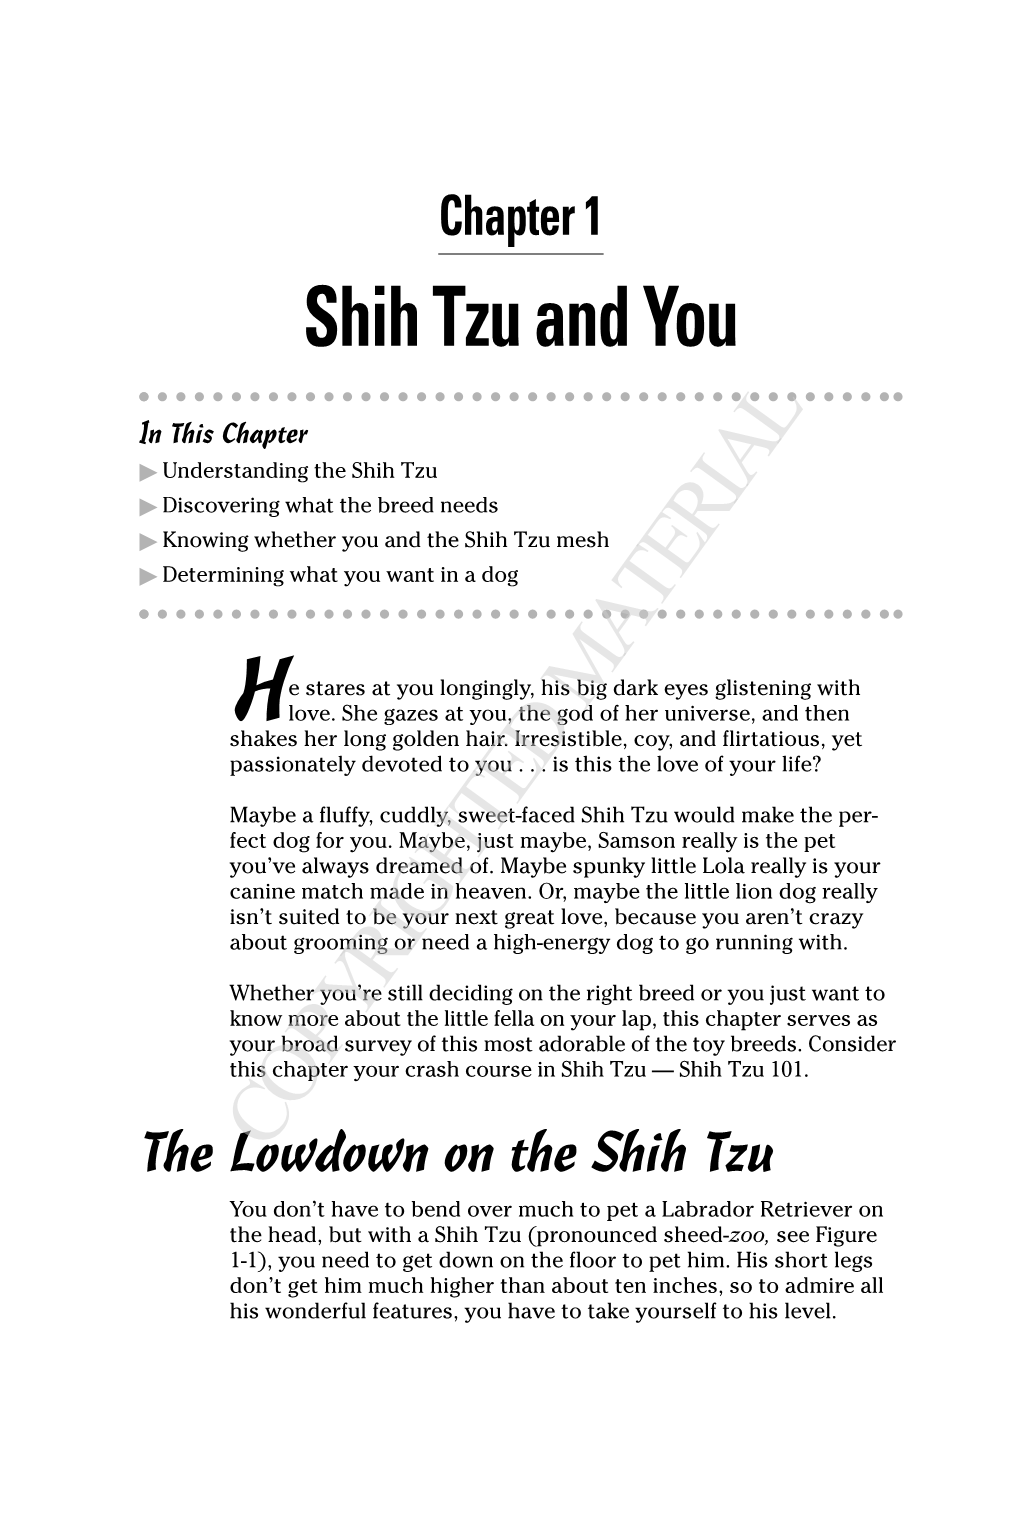 Shih Tzu and You